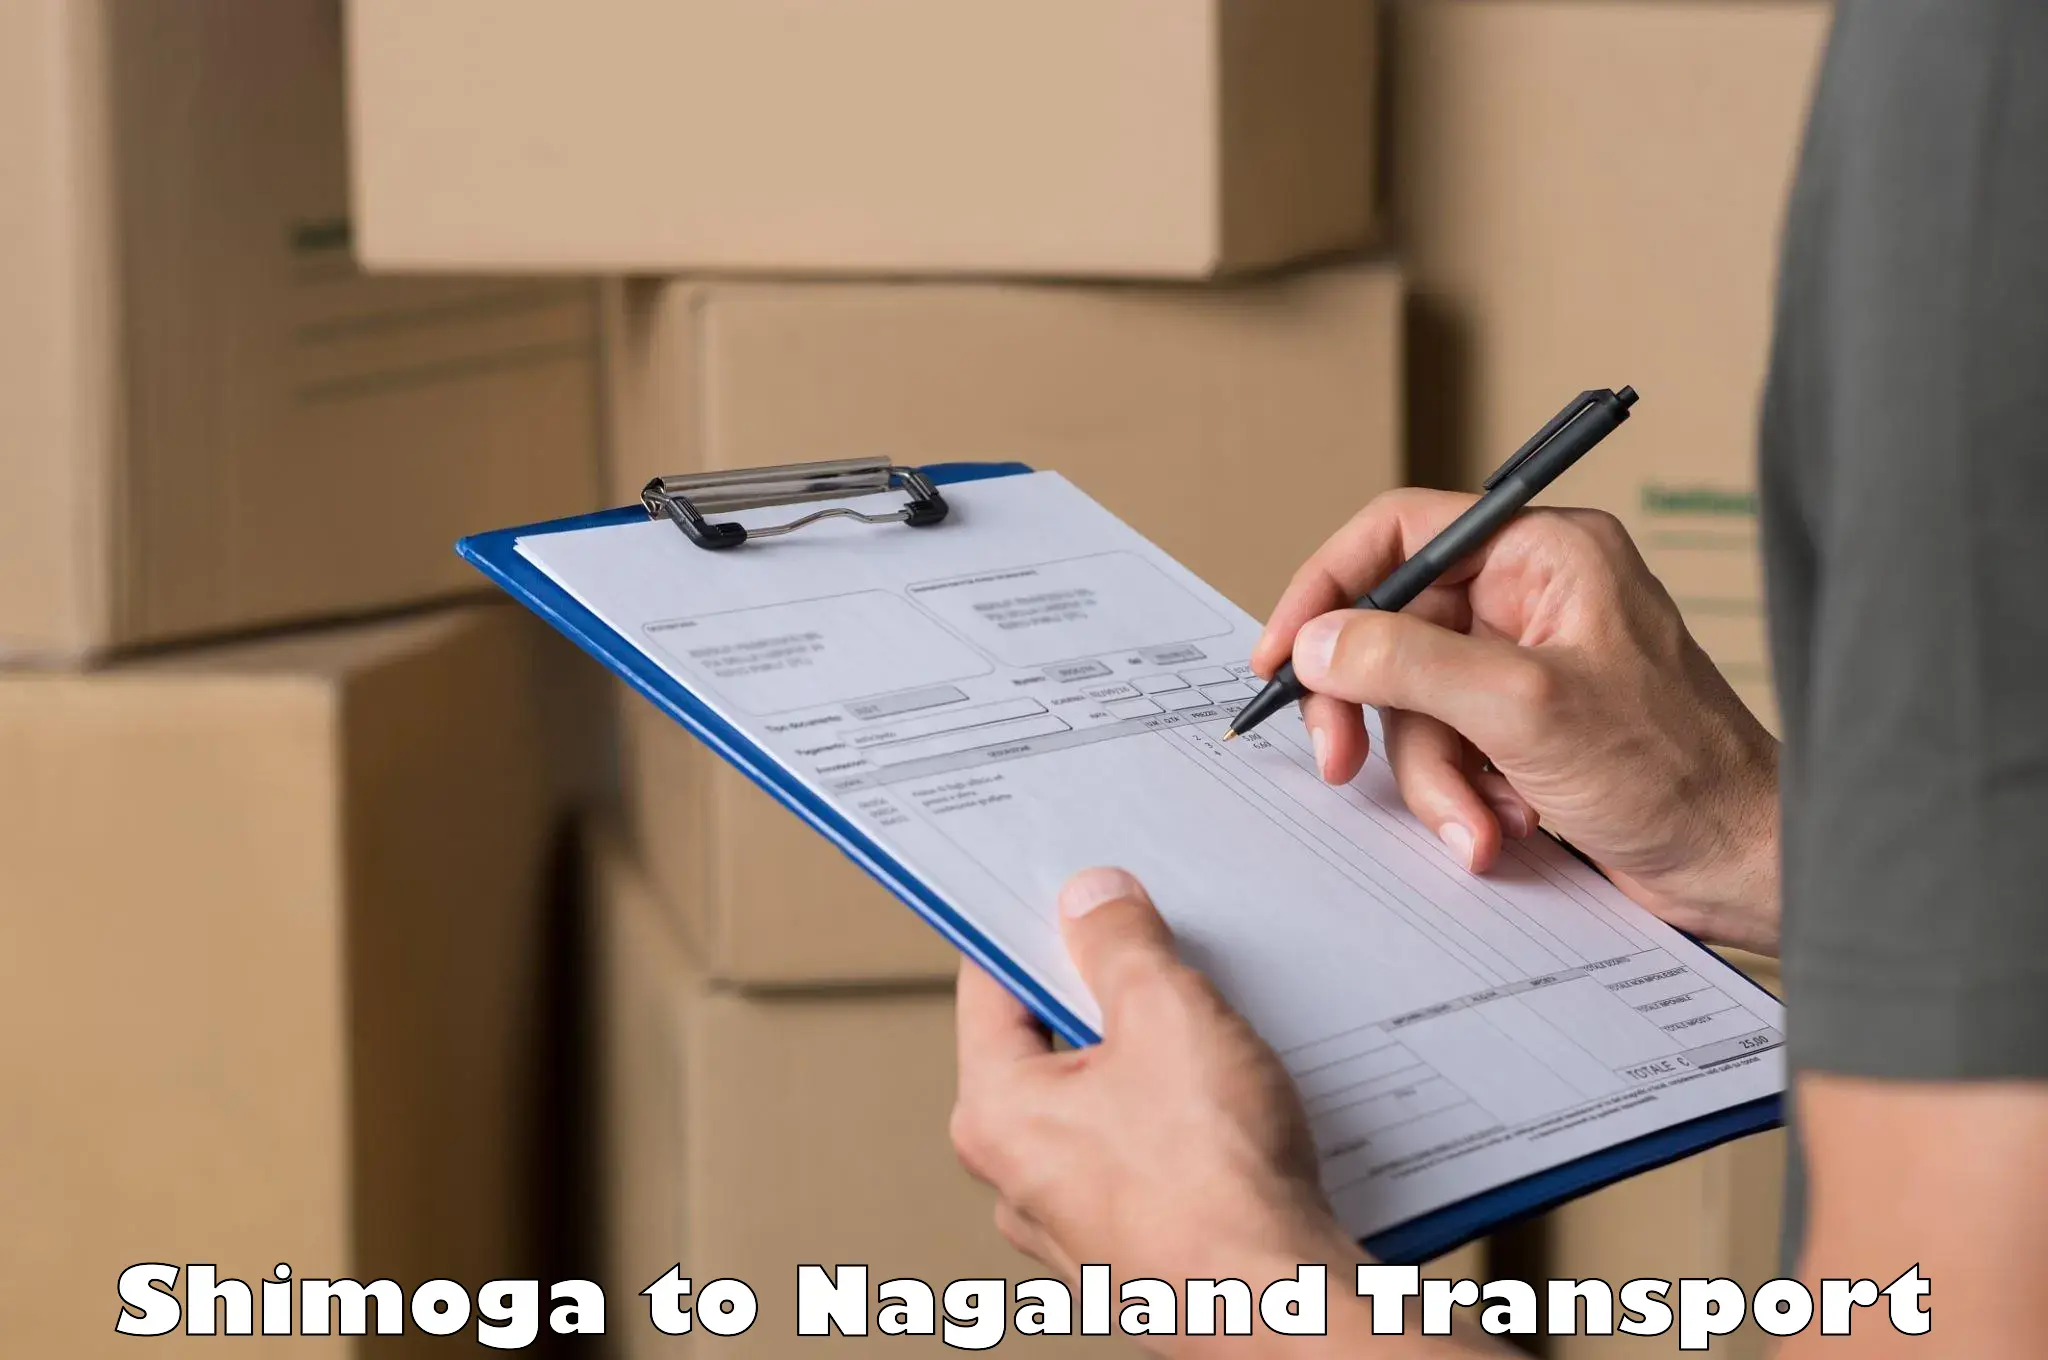 Delivery service Shimoga to Nagaland